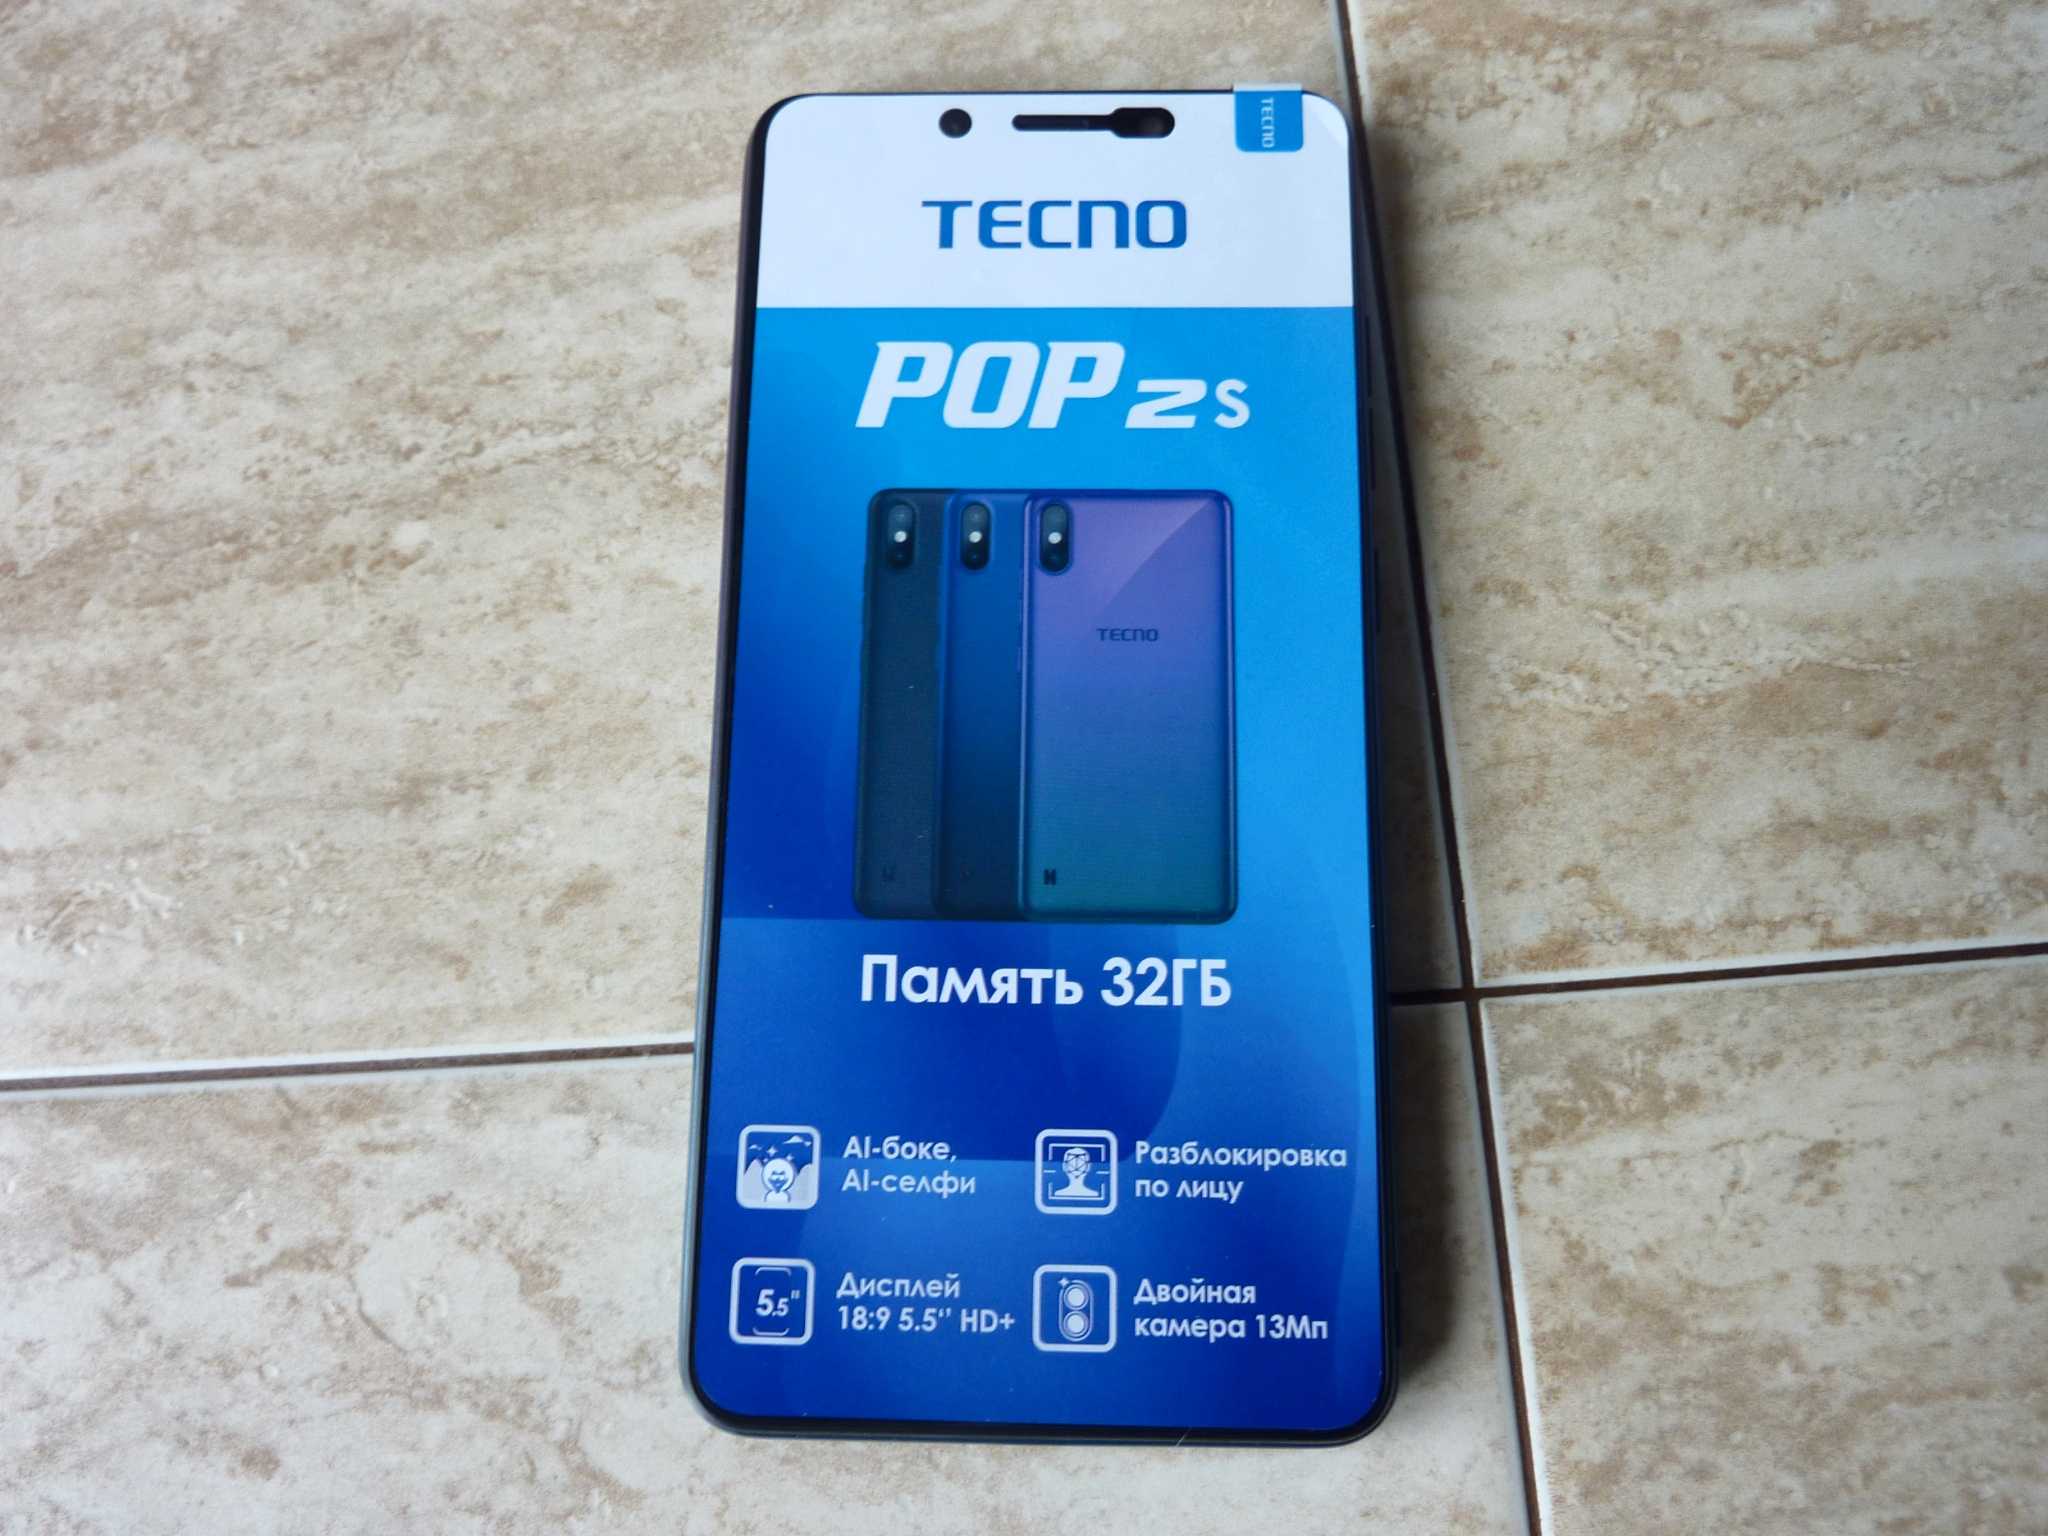 Обзор бюджетного смартфона tecno pop 2s